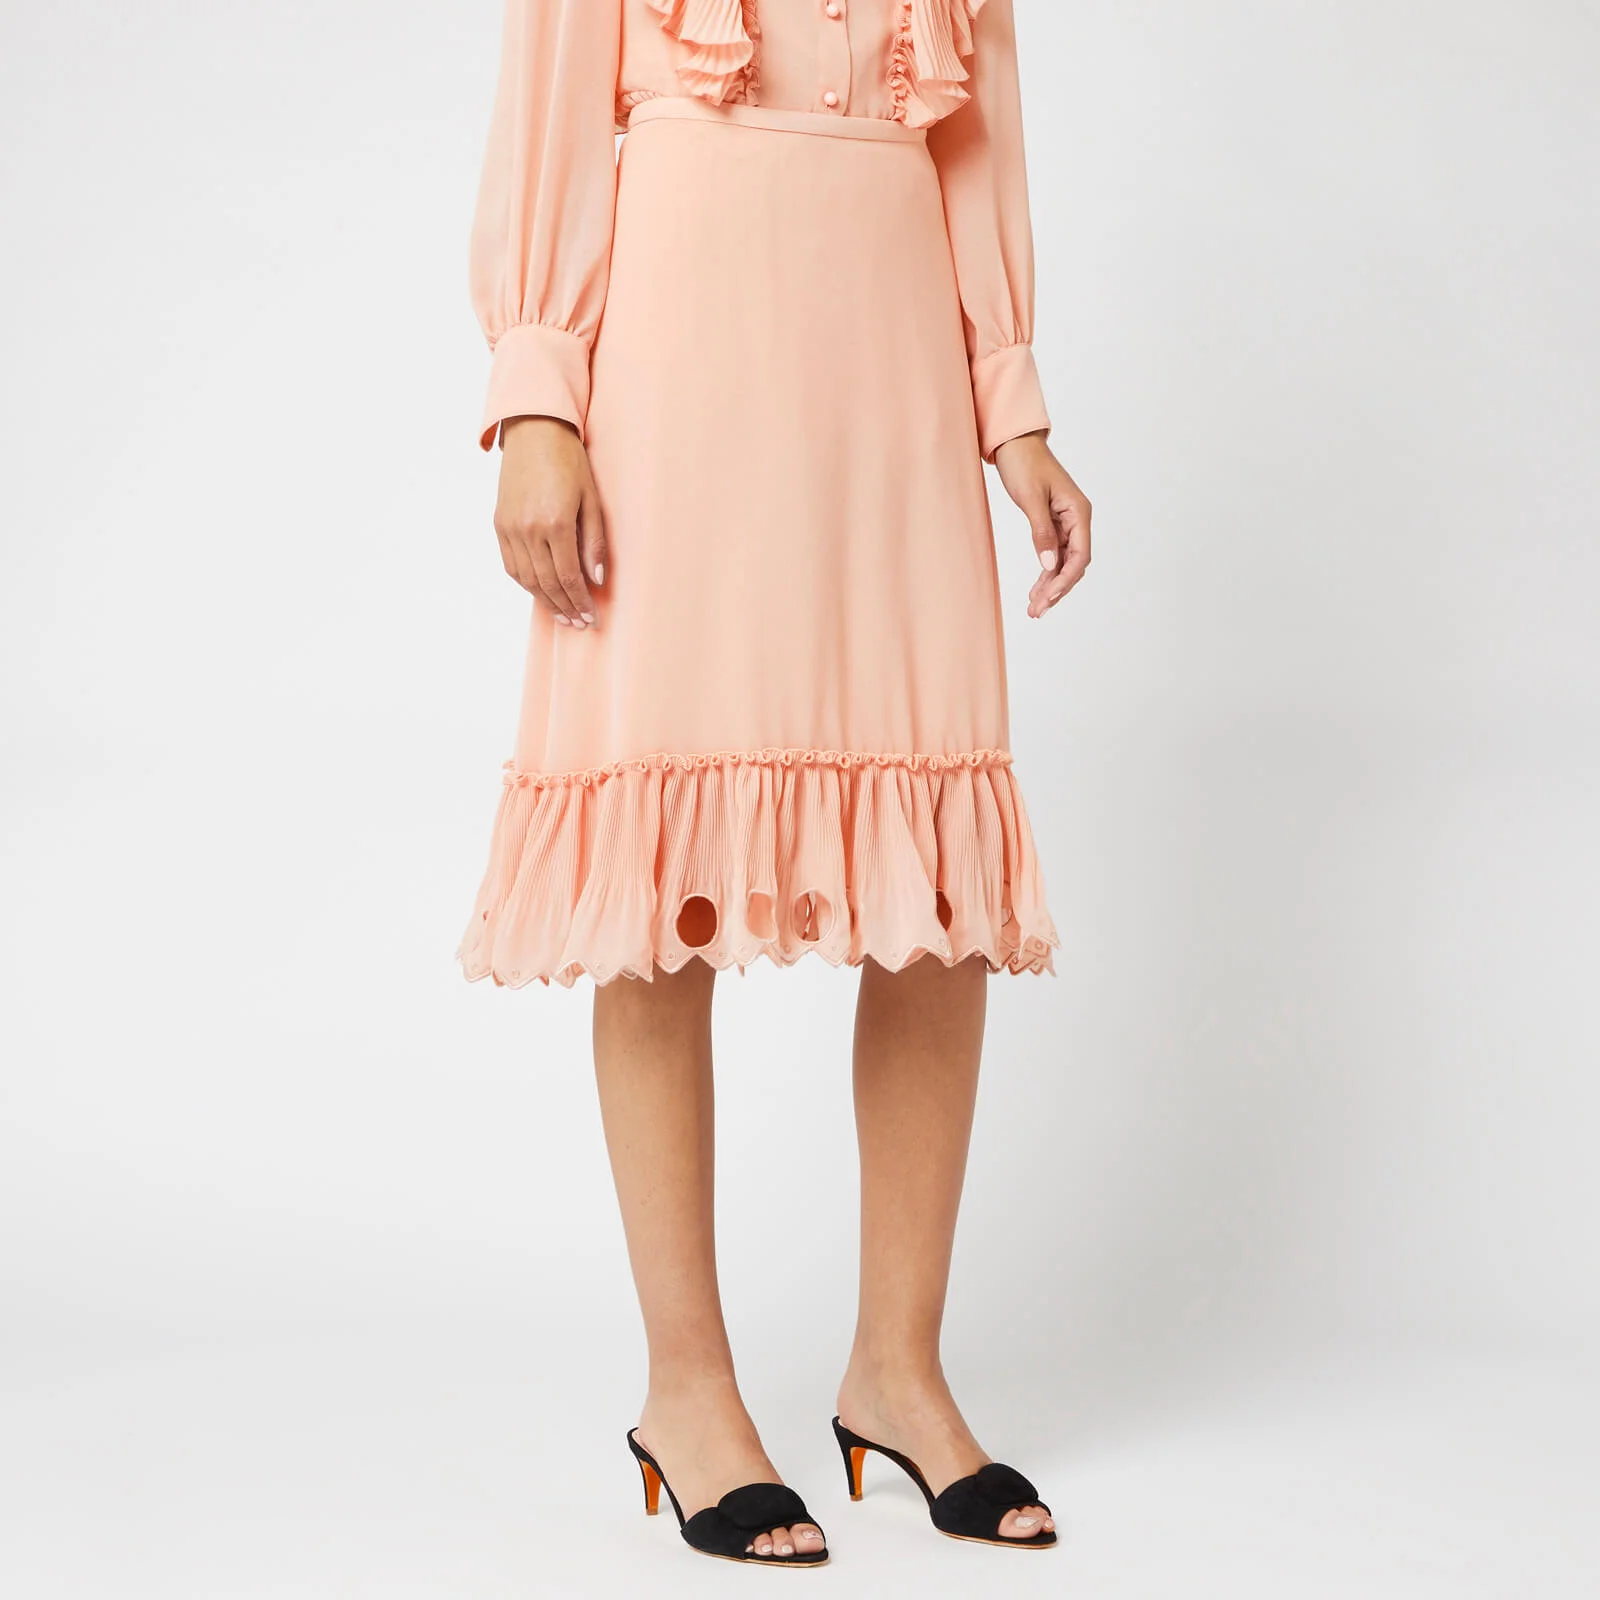 See By Chloé Women's Frill Bottom Skirt - Smokey Pink Image 1